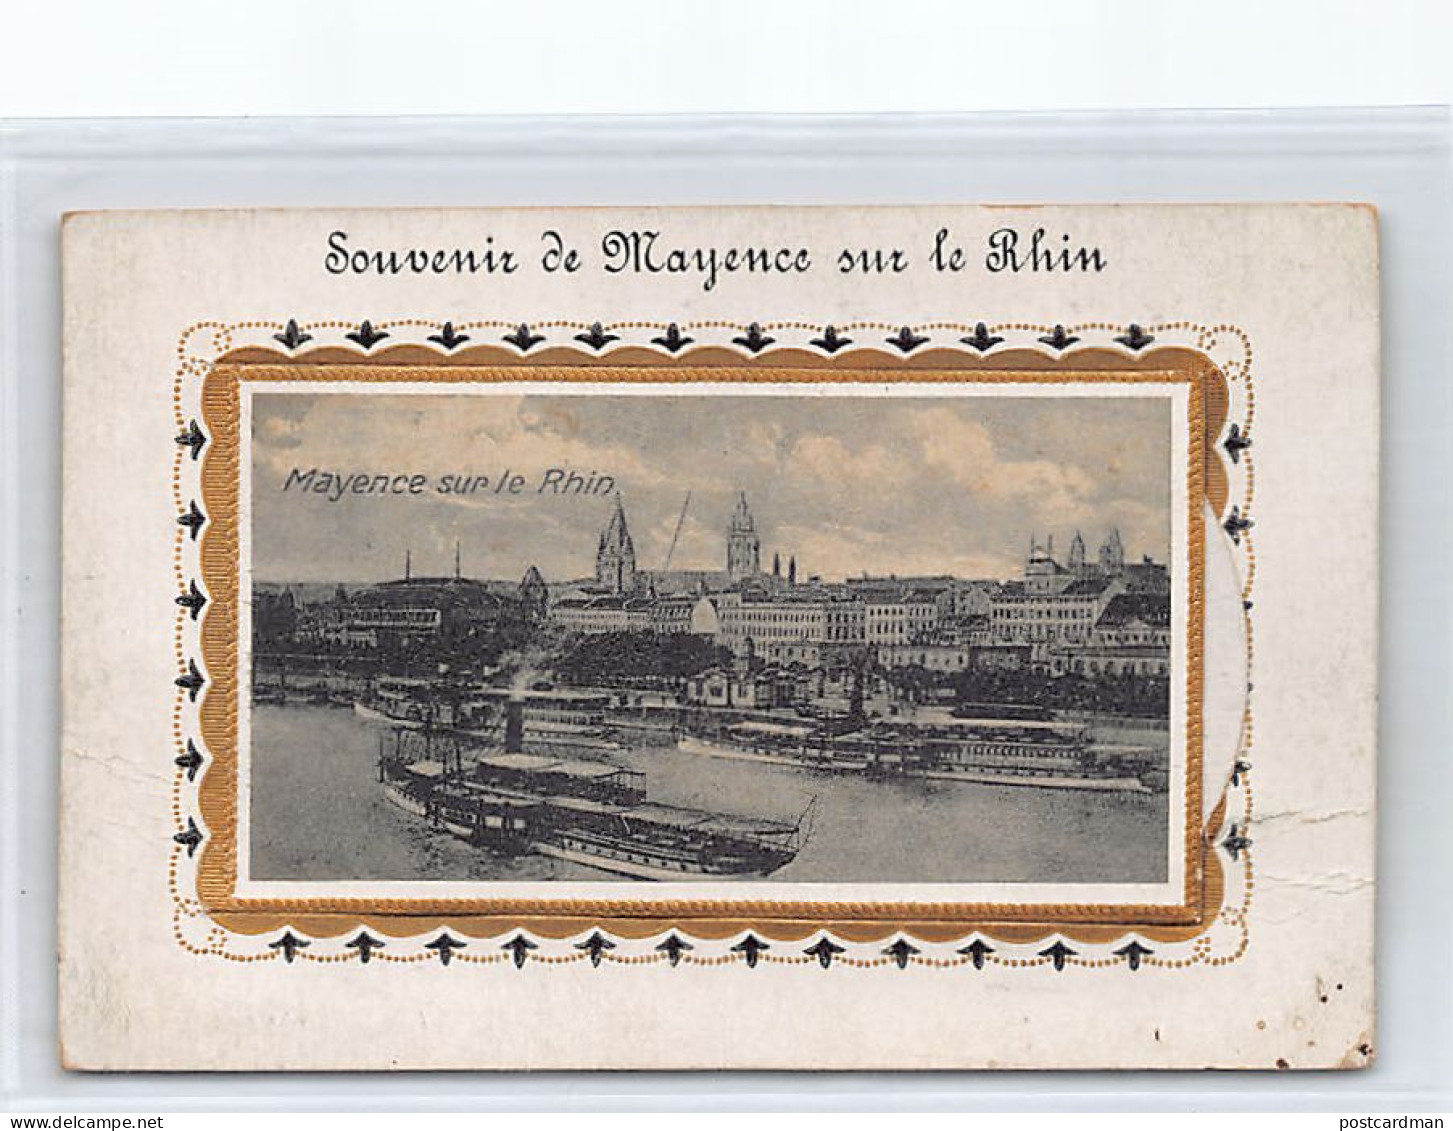 Mainz (RP) Sachet Postcard - Souvenir Von Mainz Am Rhein - Mainz